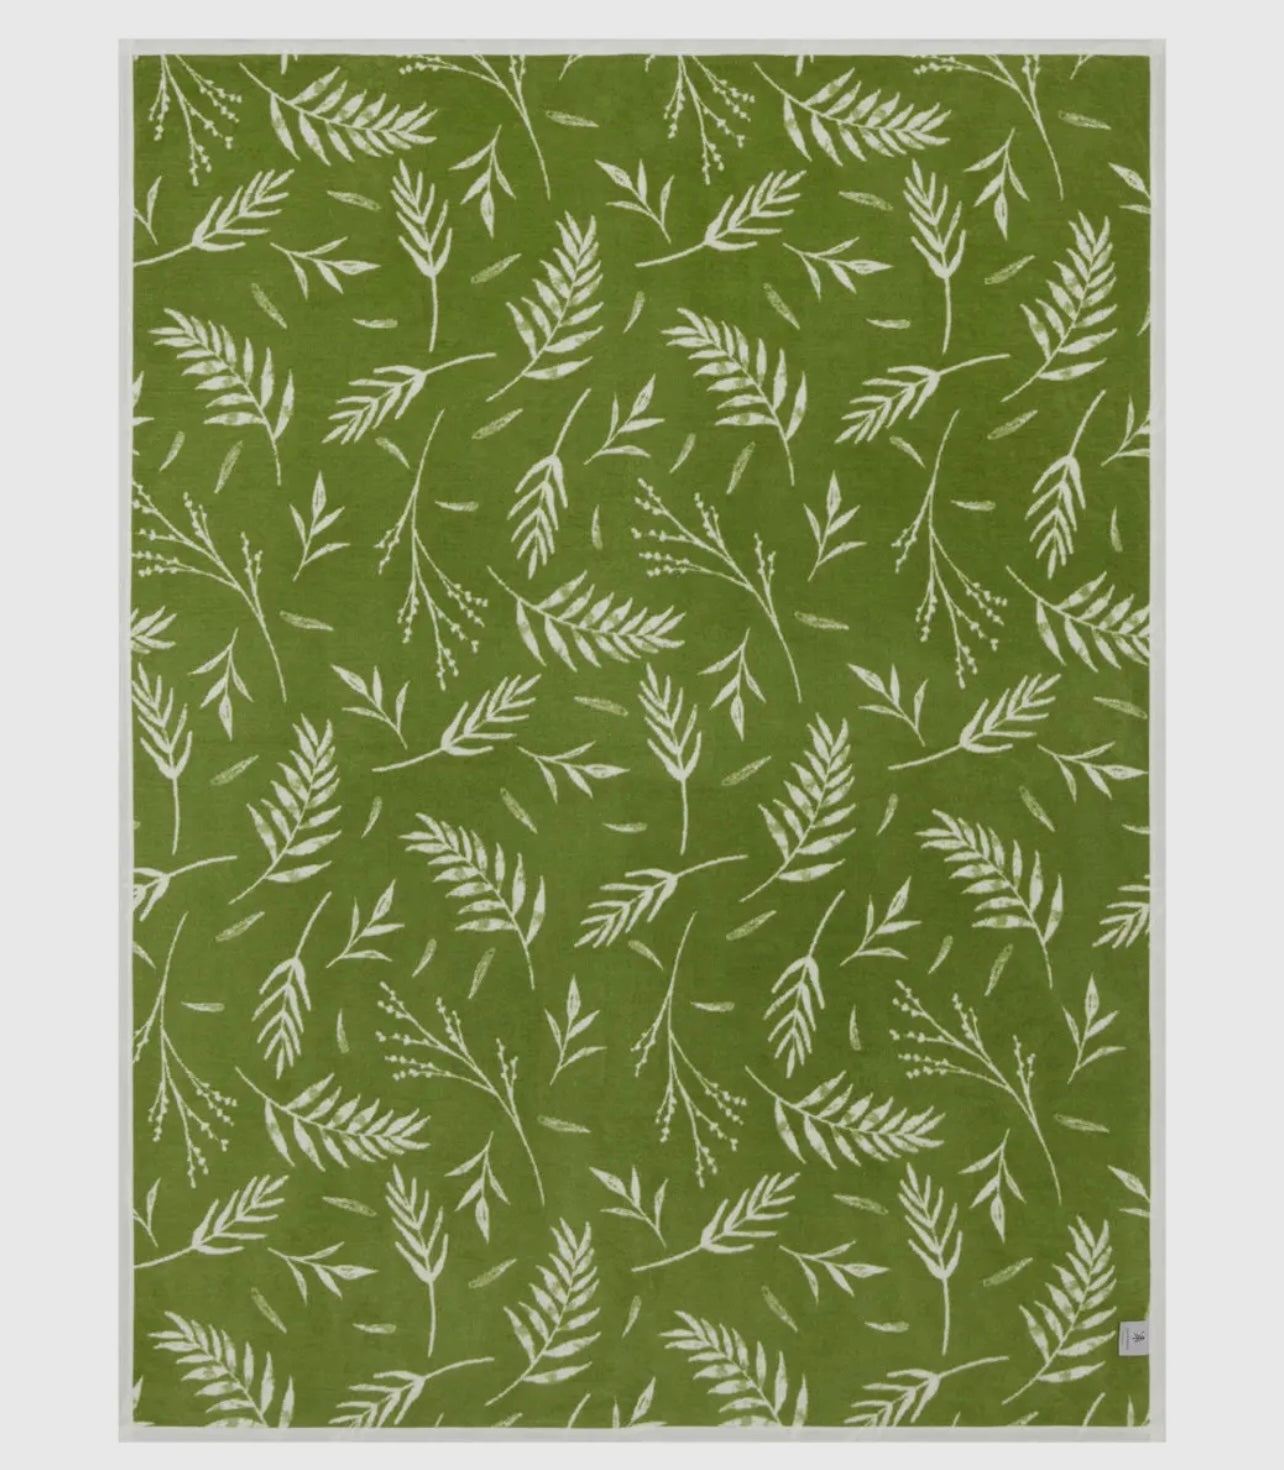 Olive Branch Blanket - Chappywrap